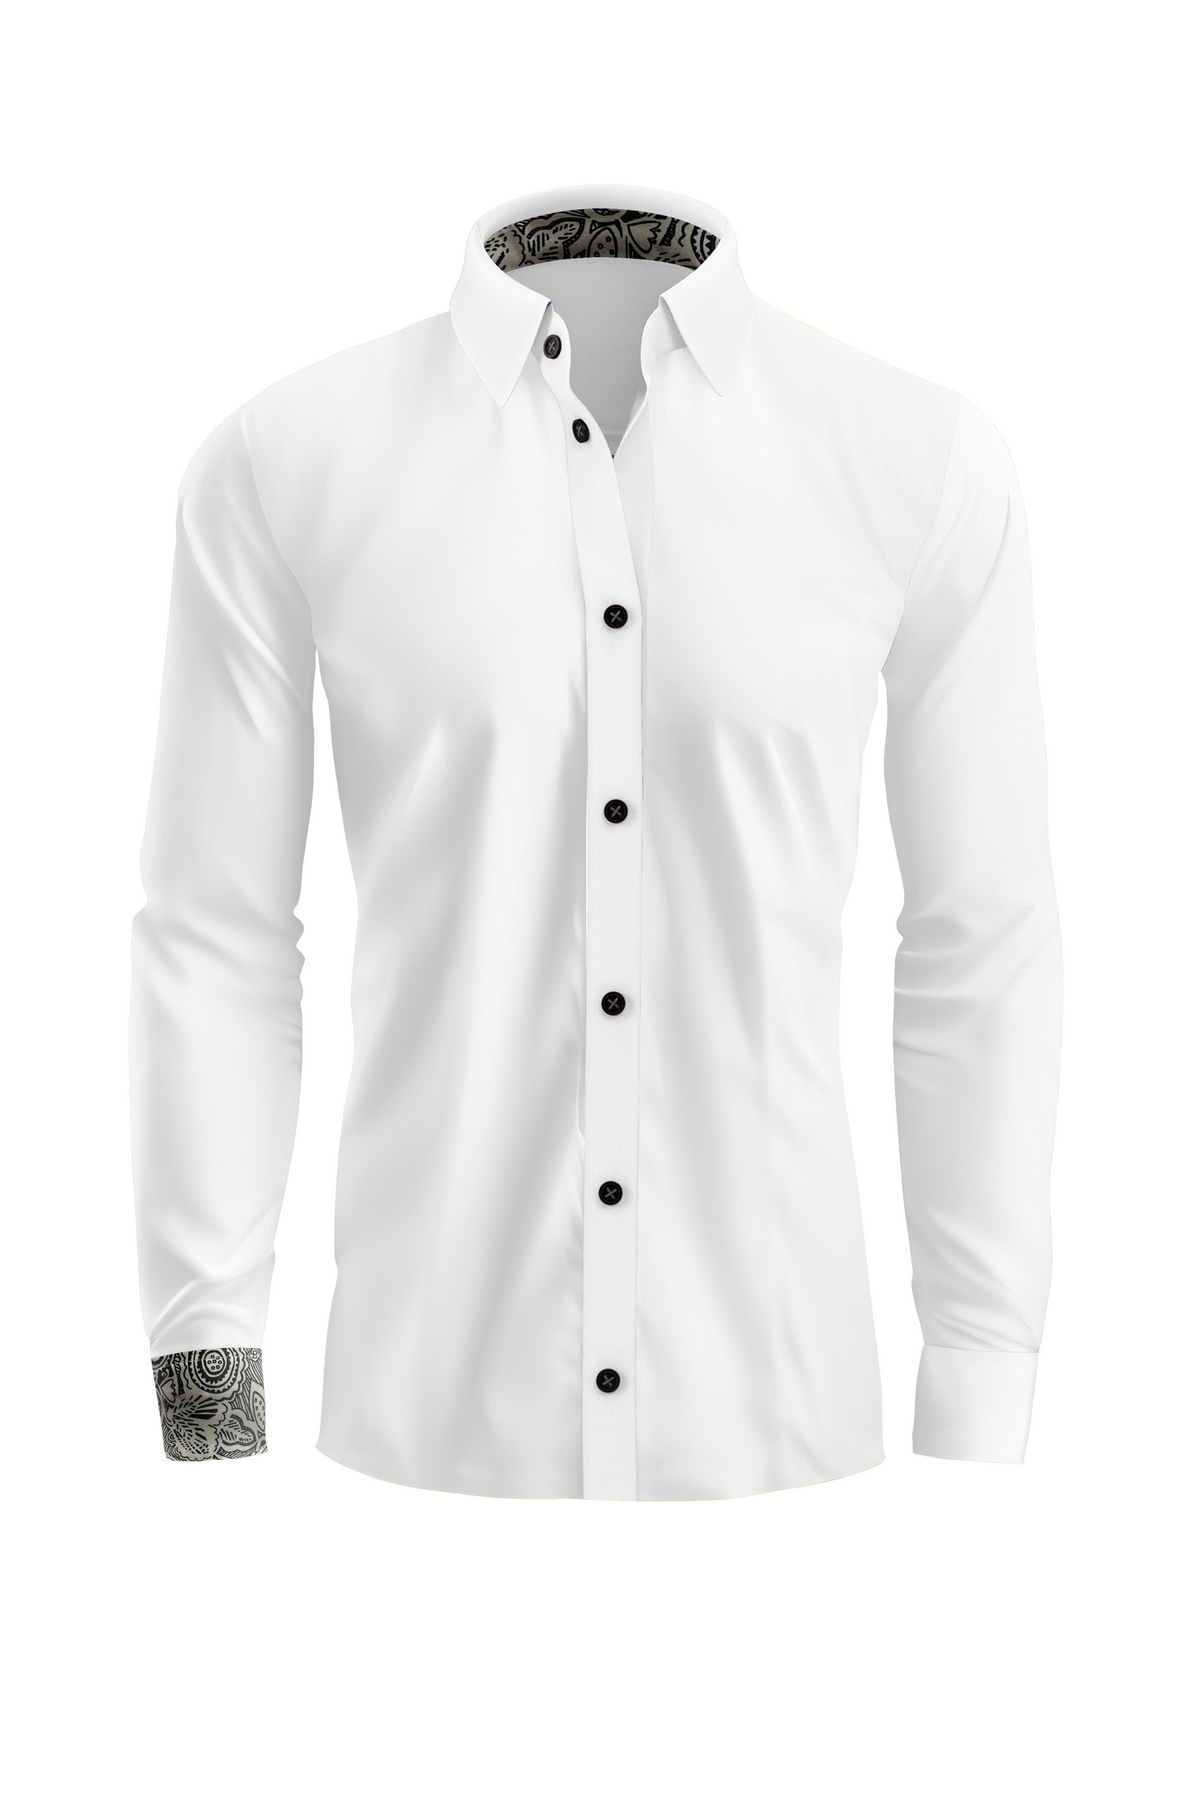 Vercini Exquisite White Paisley Interior Cotton Dress Shirt